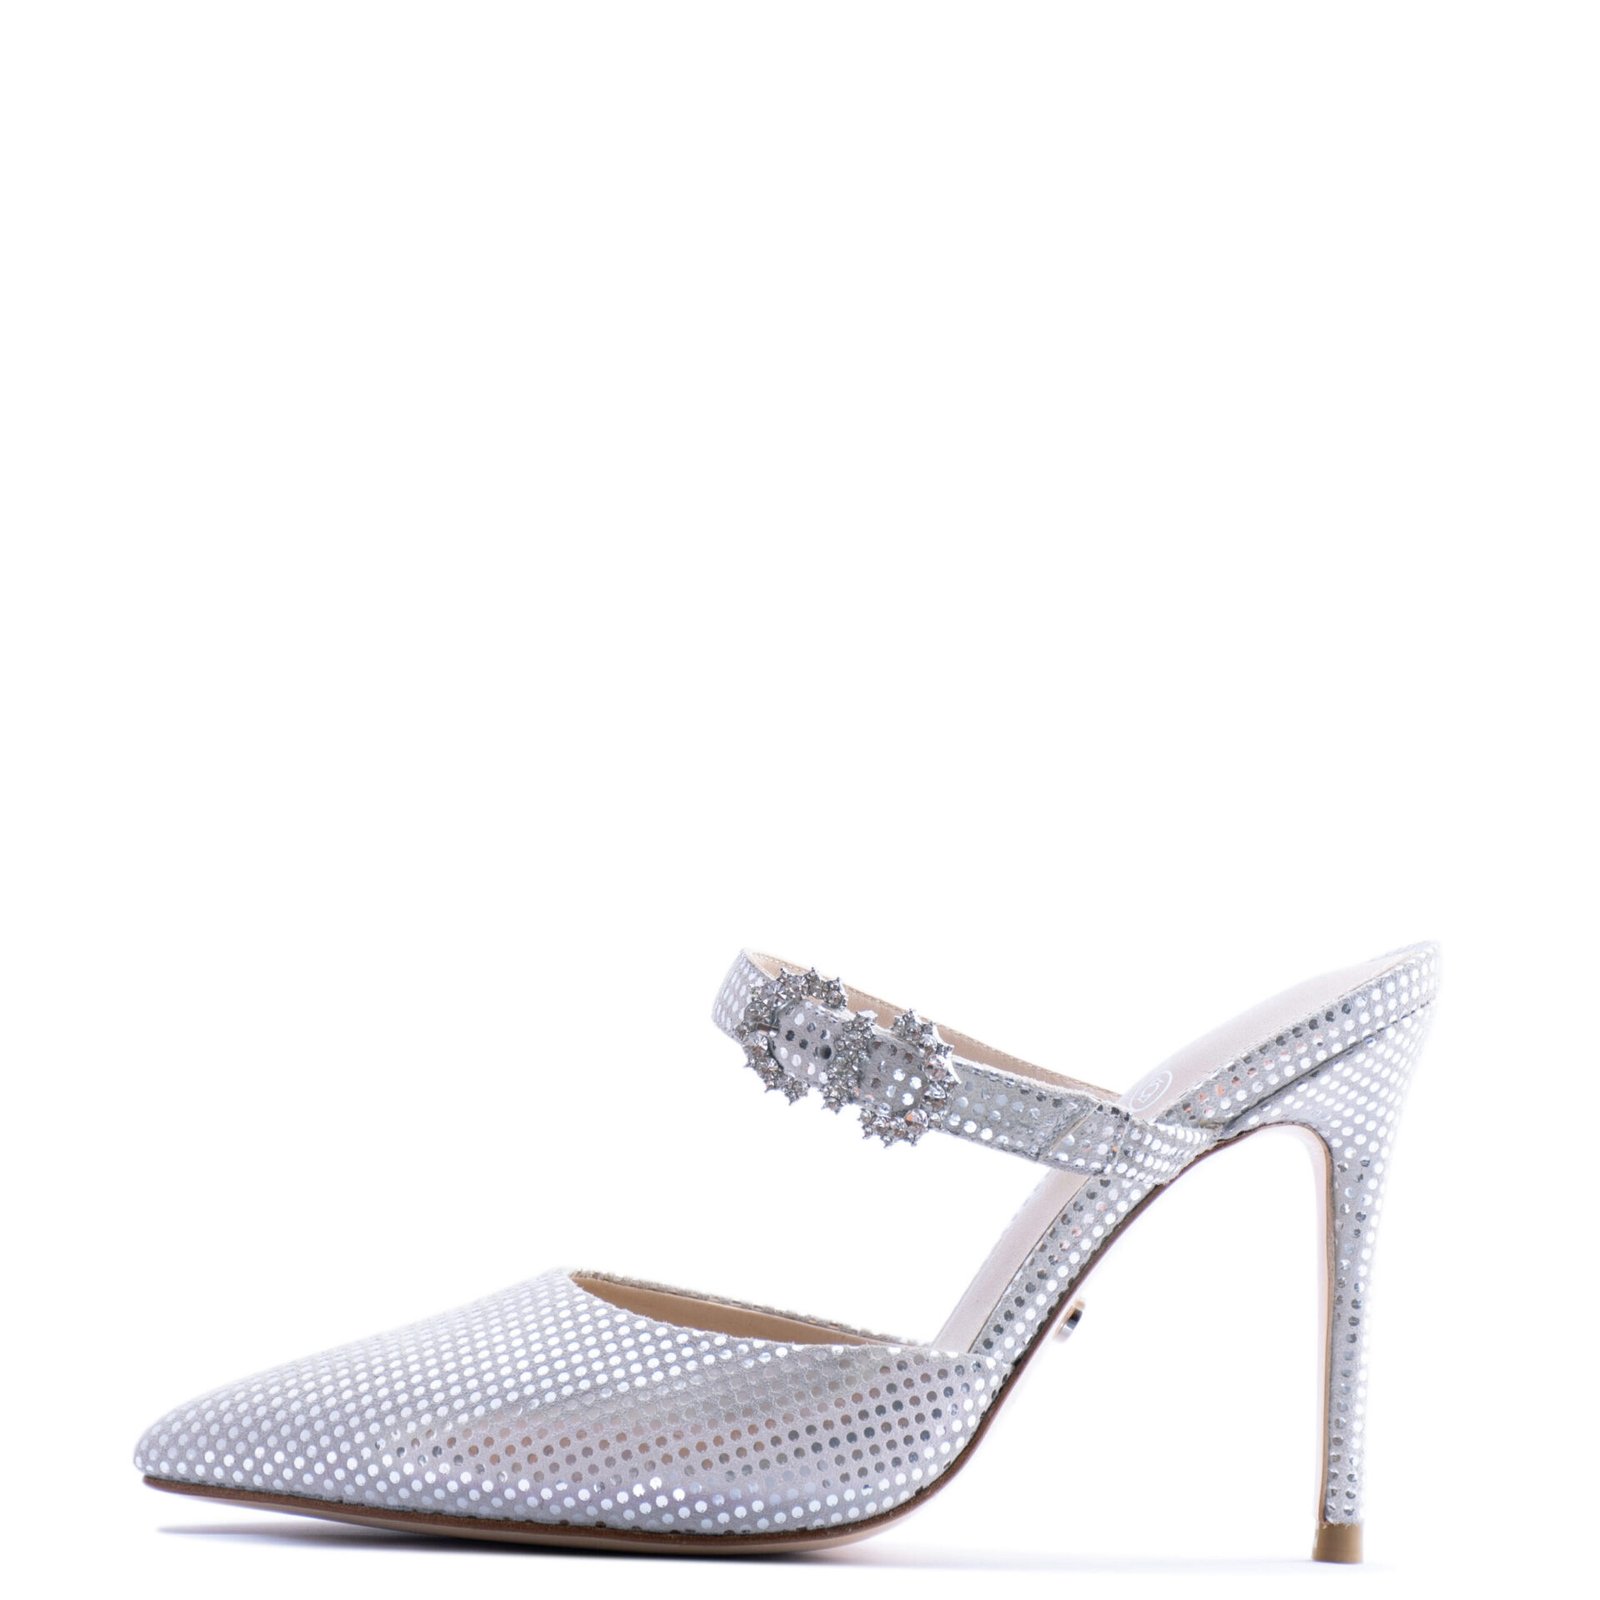 silver stilletos heels for men and women